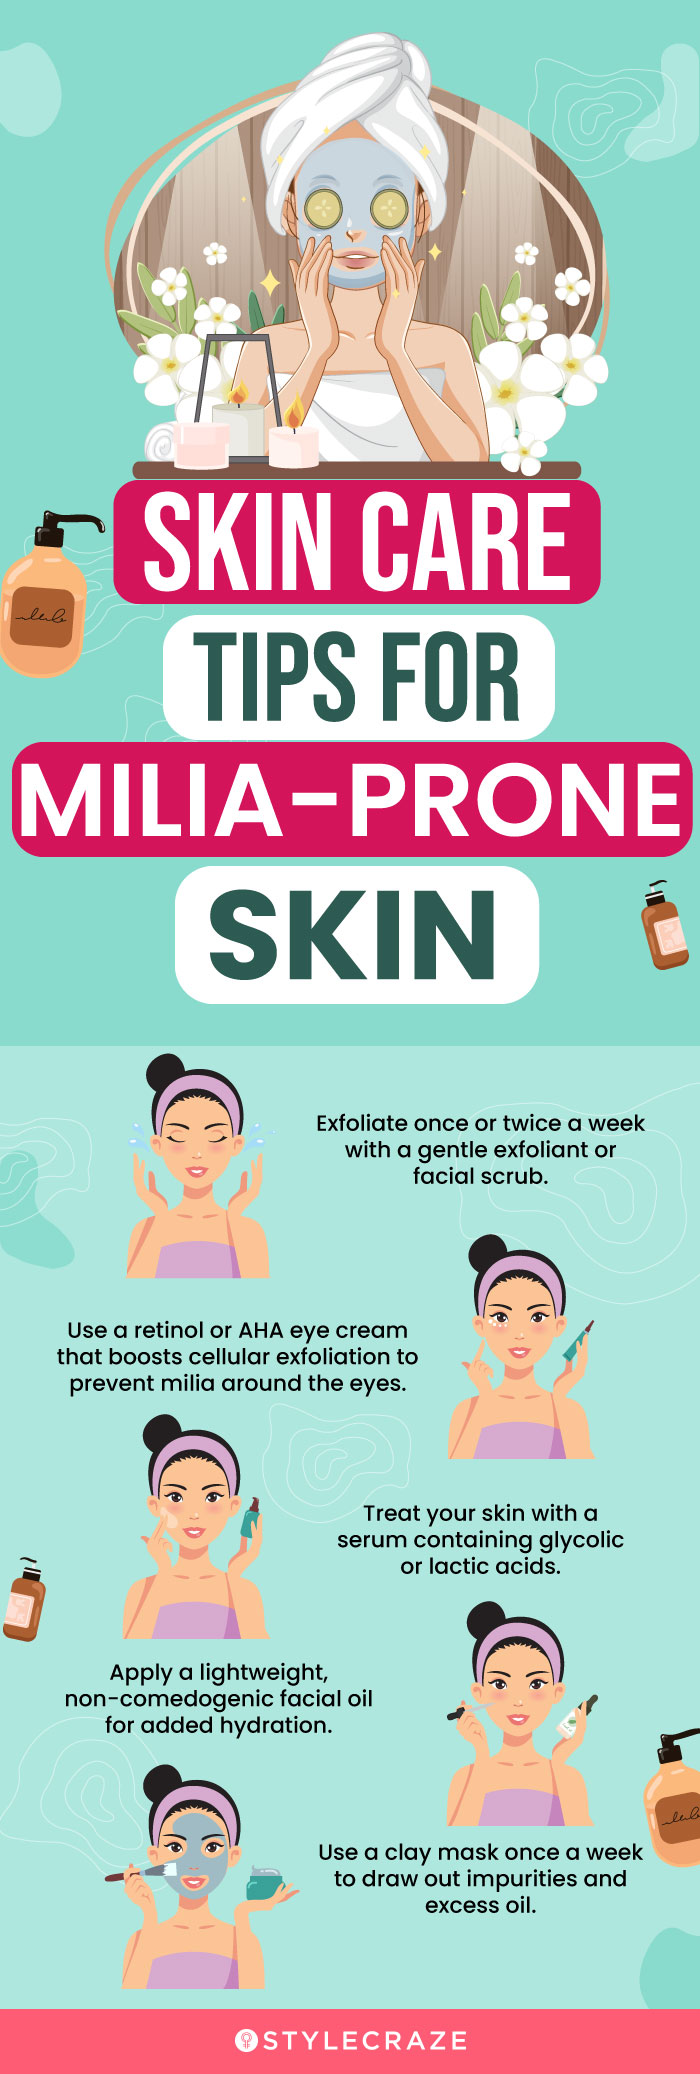 Skin Care Tips For Milia-Prone Skin (infographic)